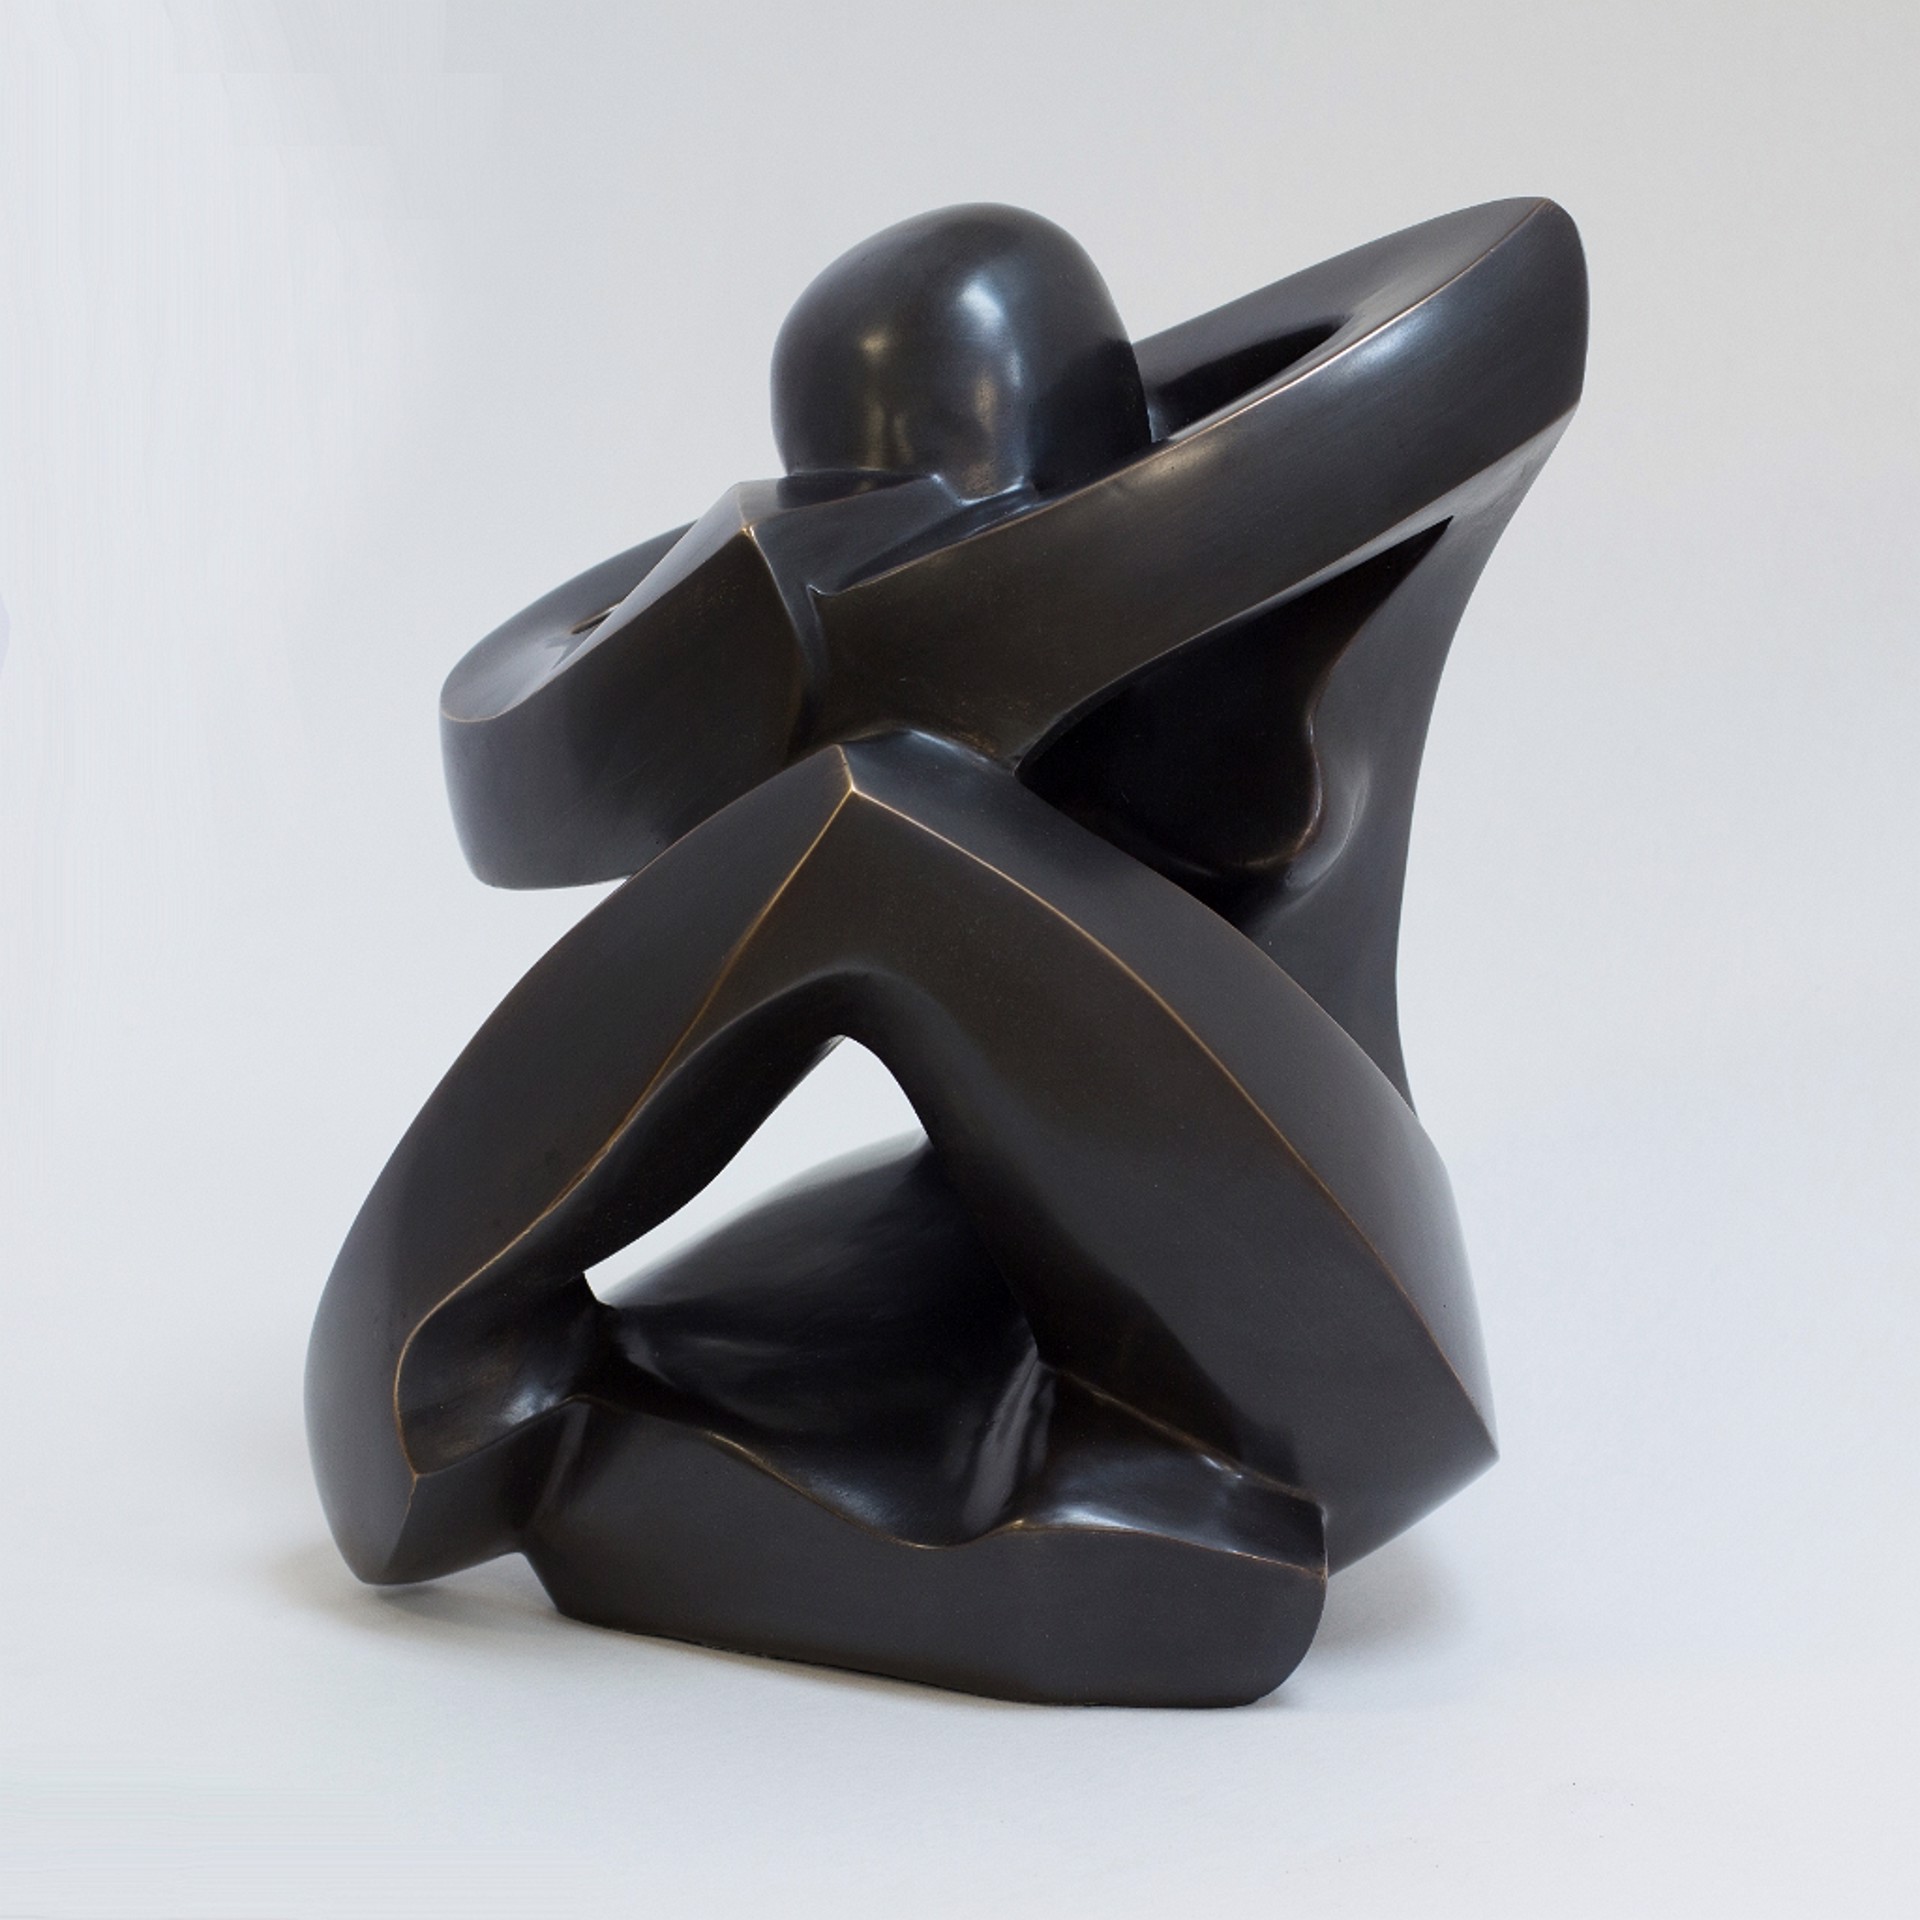 "Refuge" Bronze sculpture by Mark Yale Harris